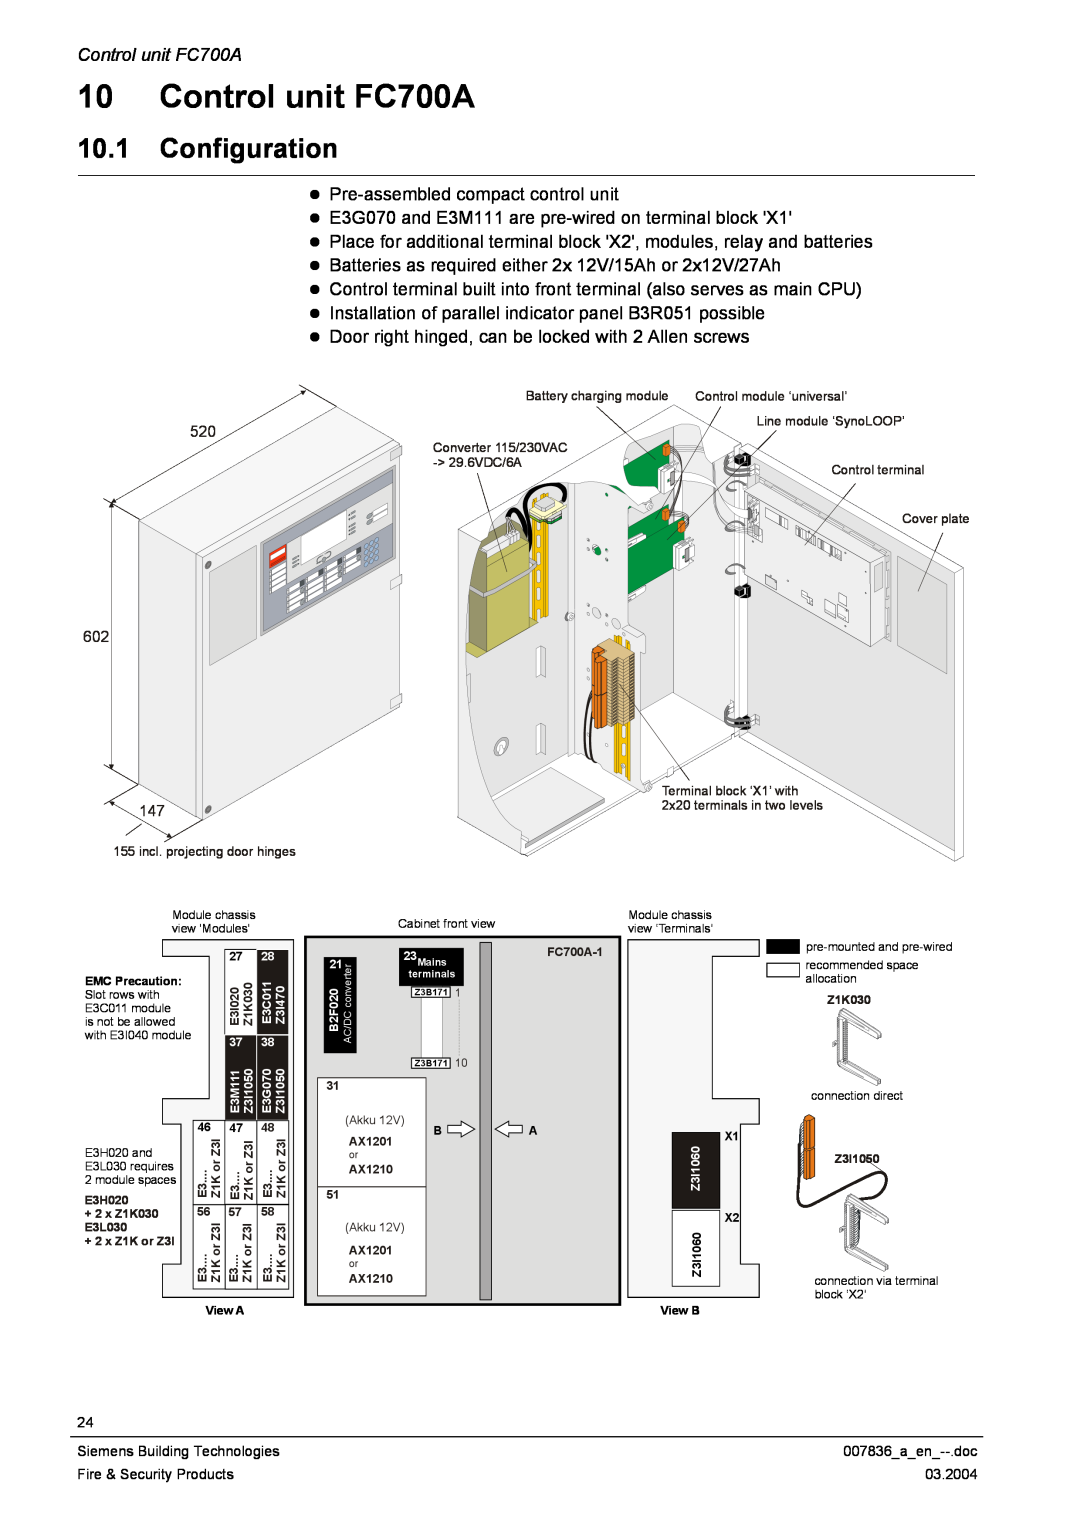 Siemens manual Control unit FC700A, 10.1Configuration 